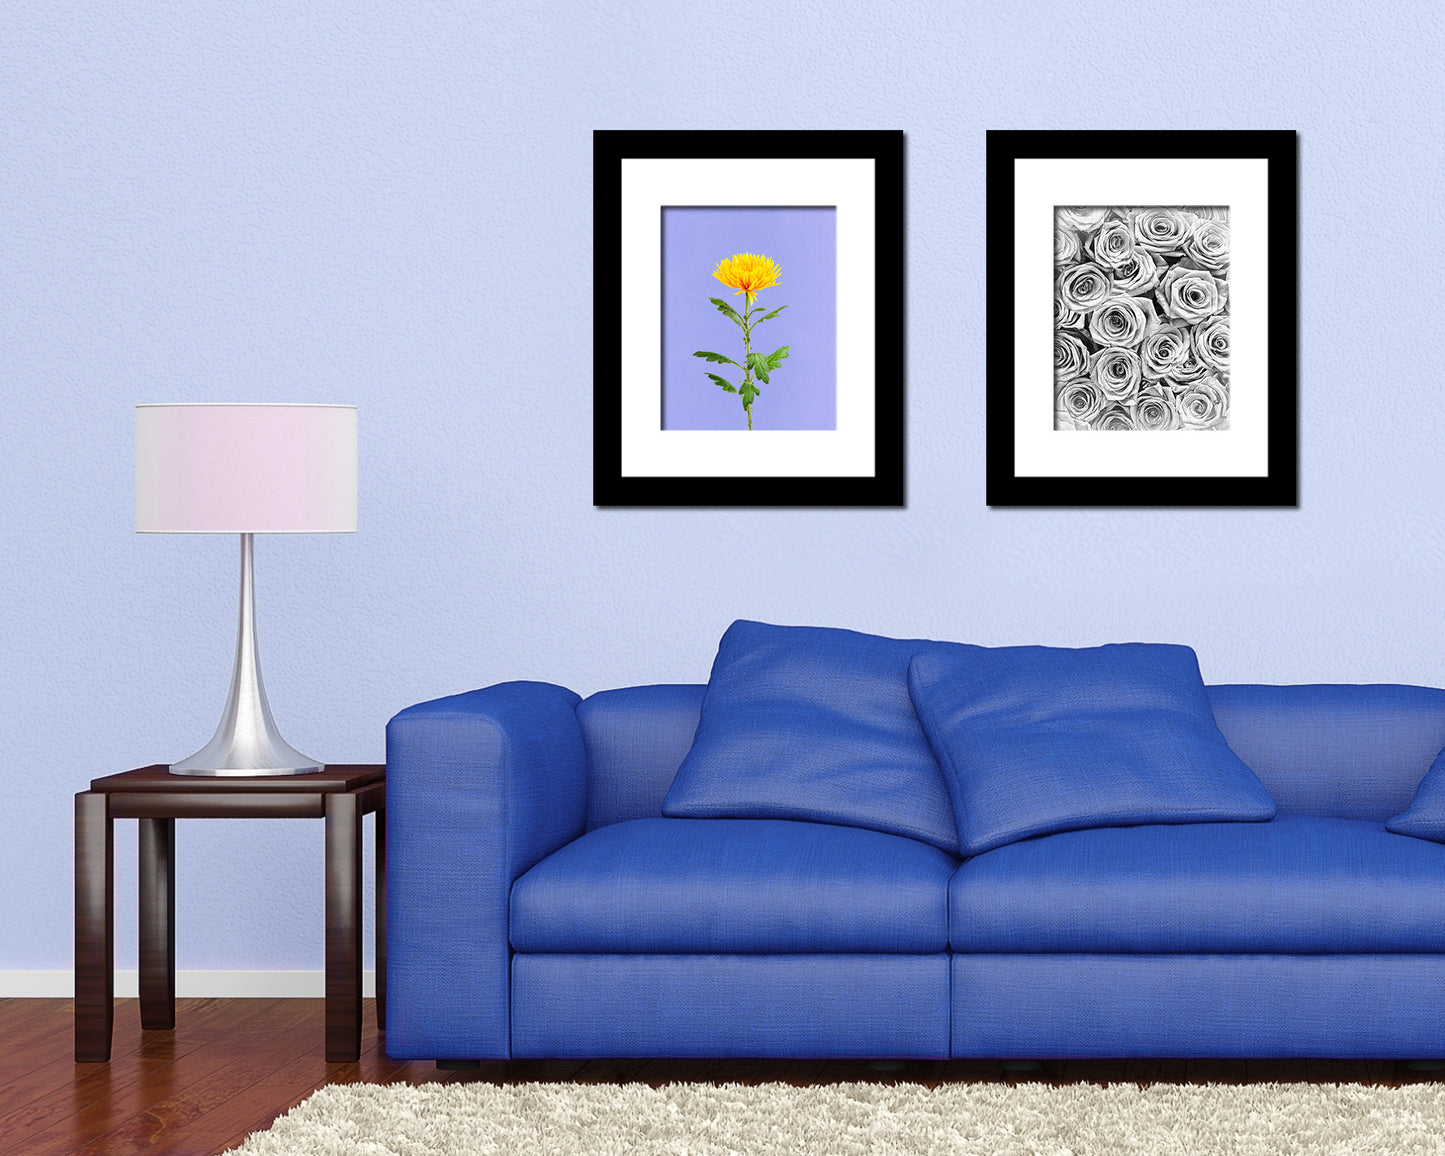 Yellow Chrysanthemum Flower Colorful Plants Art Wood Framed Print Wall Decor Gifts